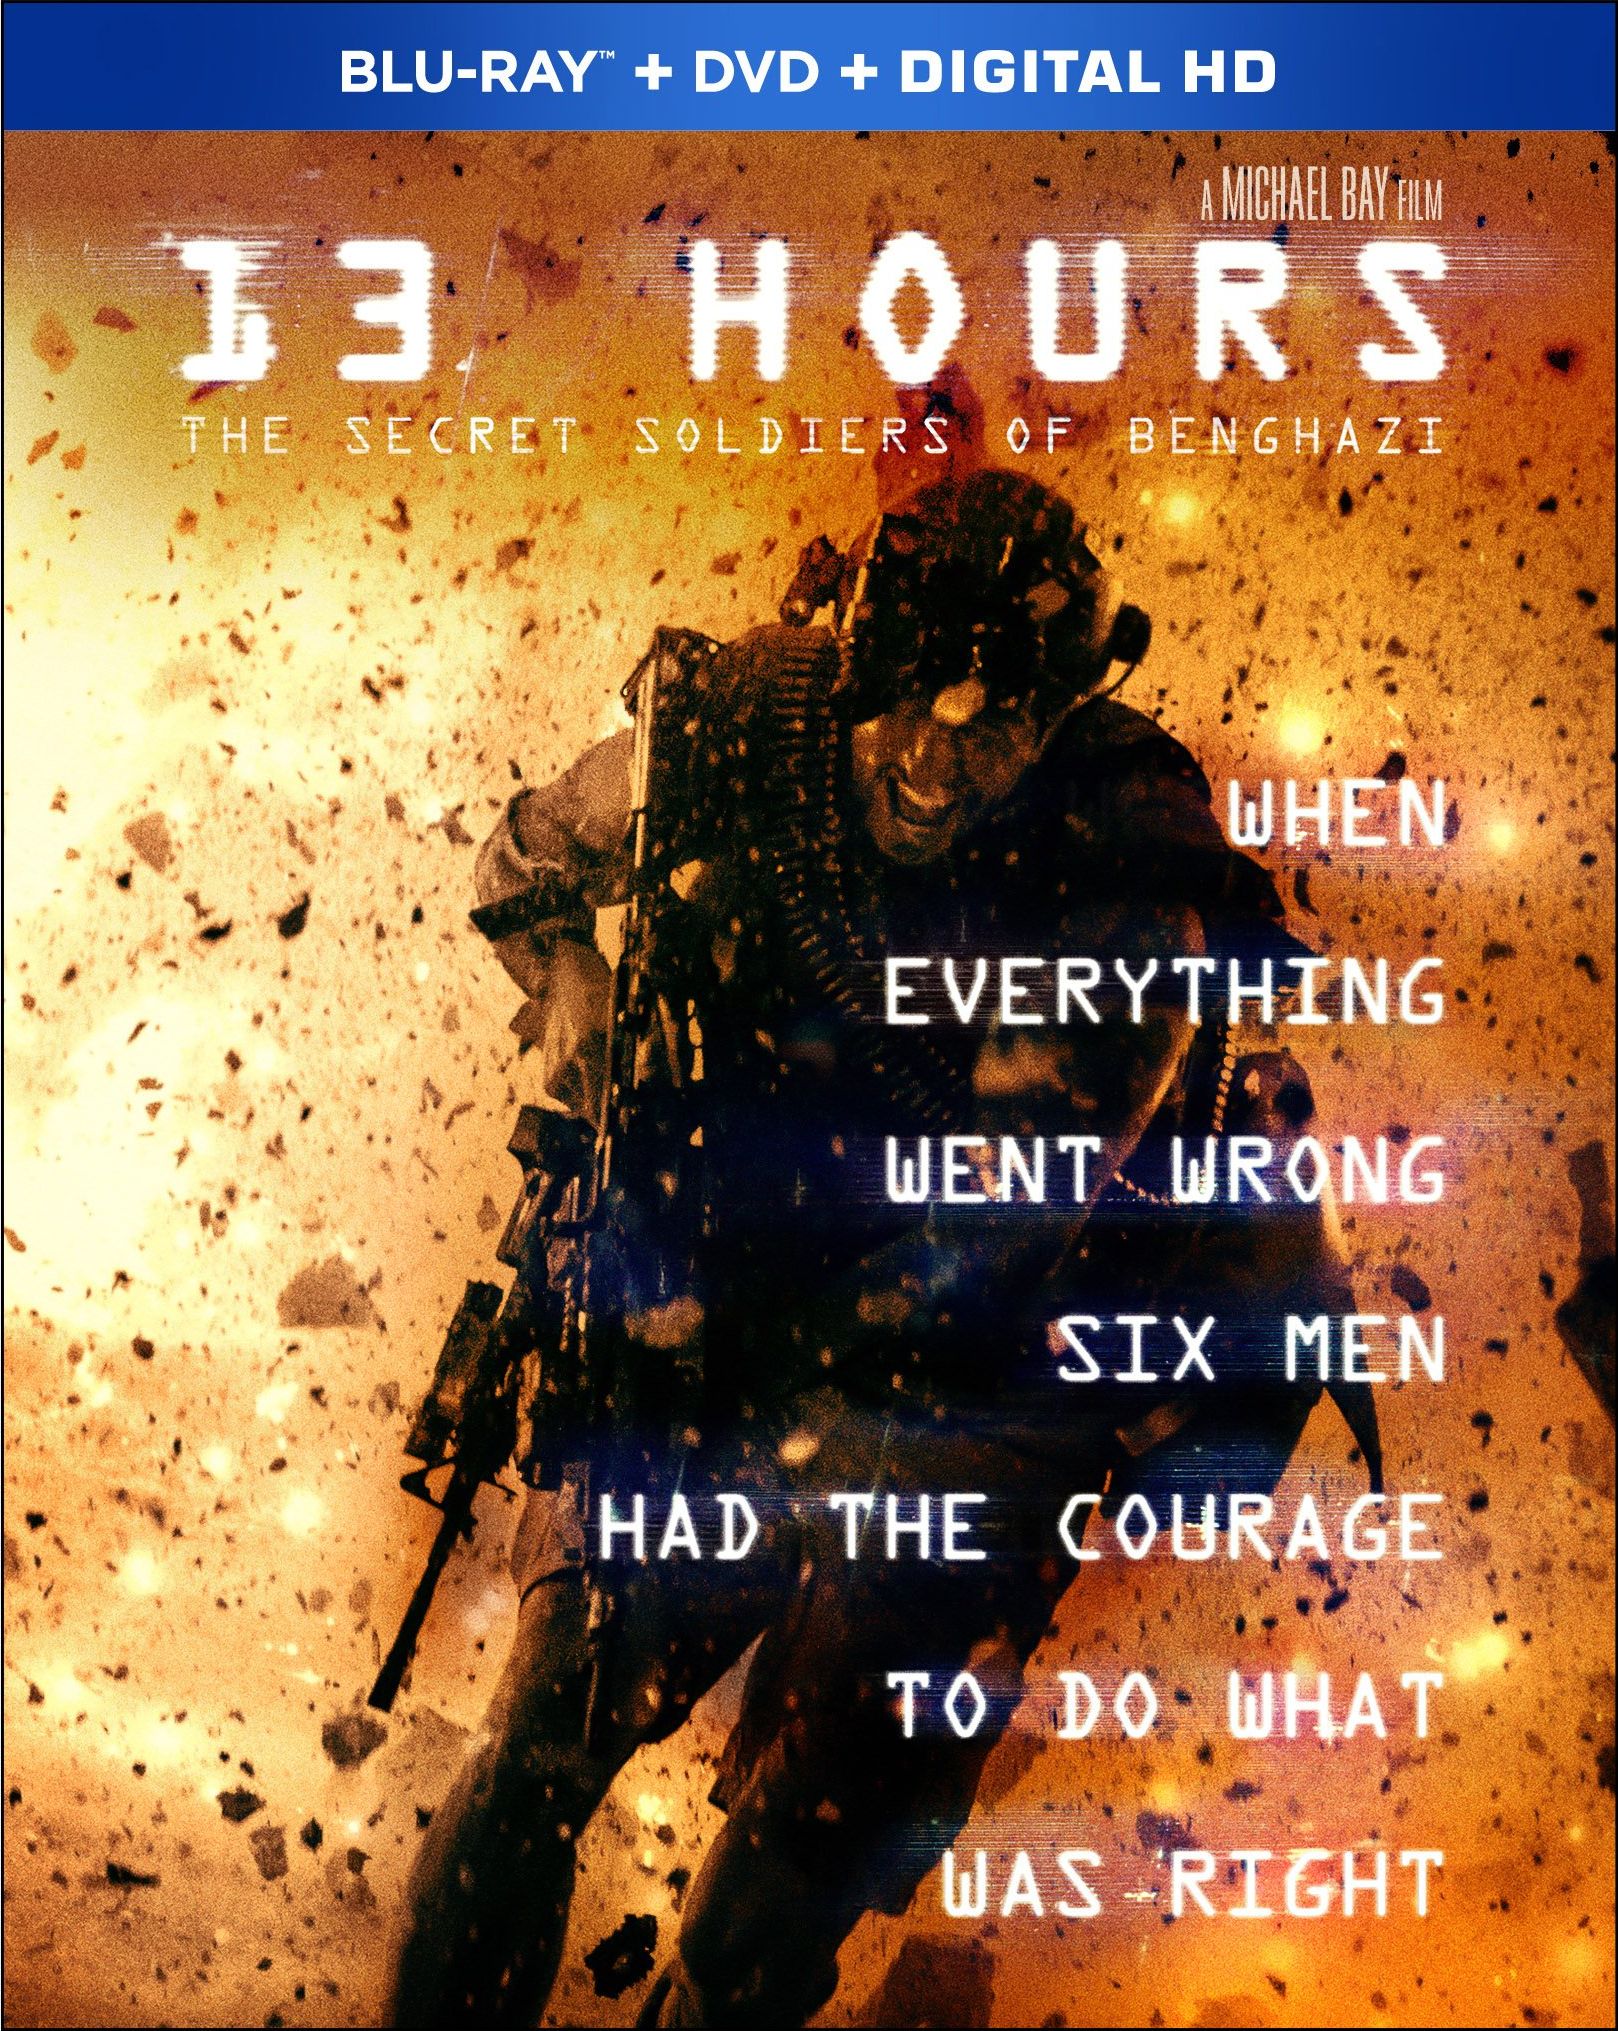 13 Hours: The Secret Soldiers of Benghazi DVD Release Date June 7, 2016